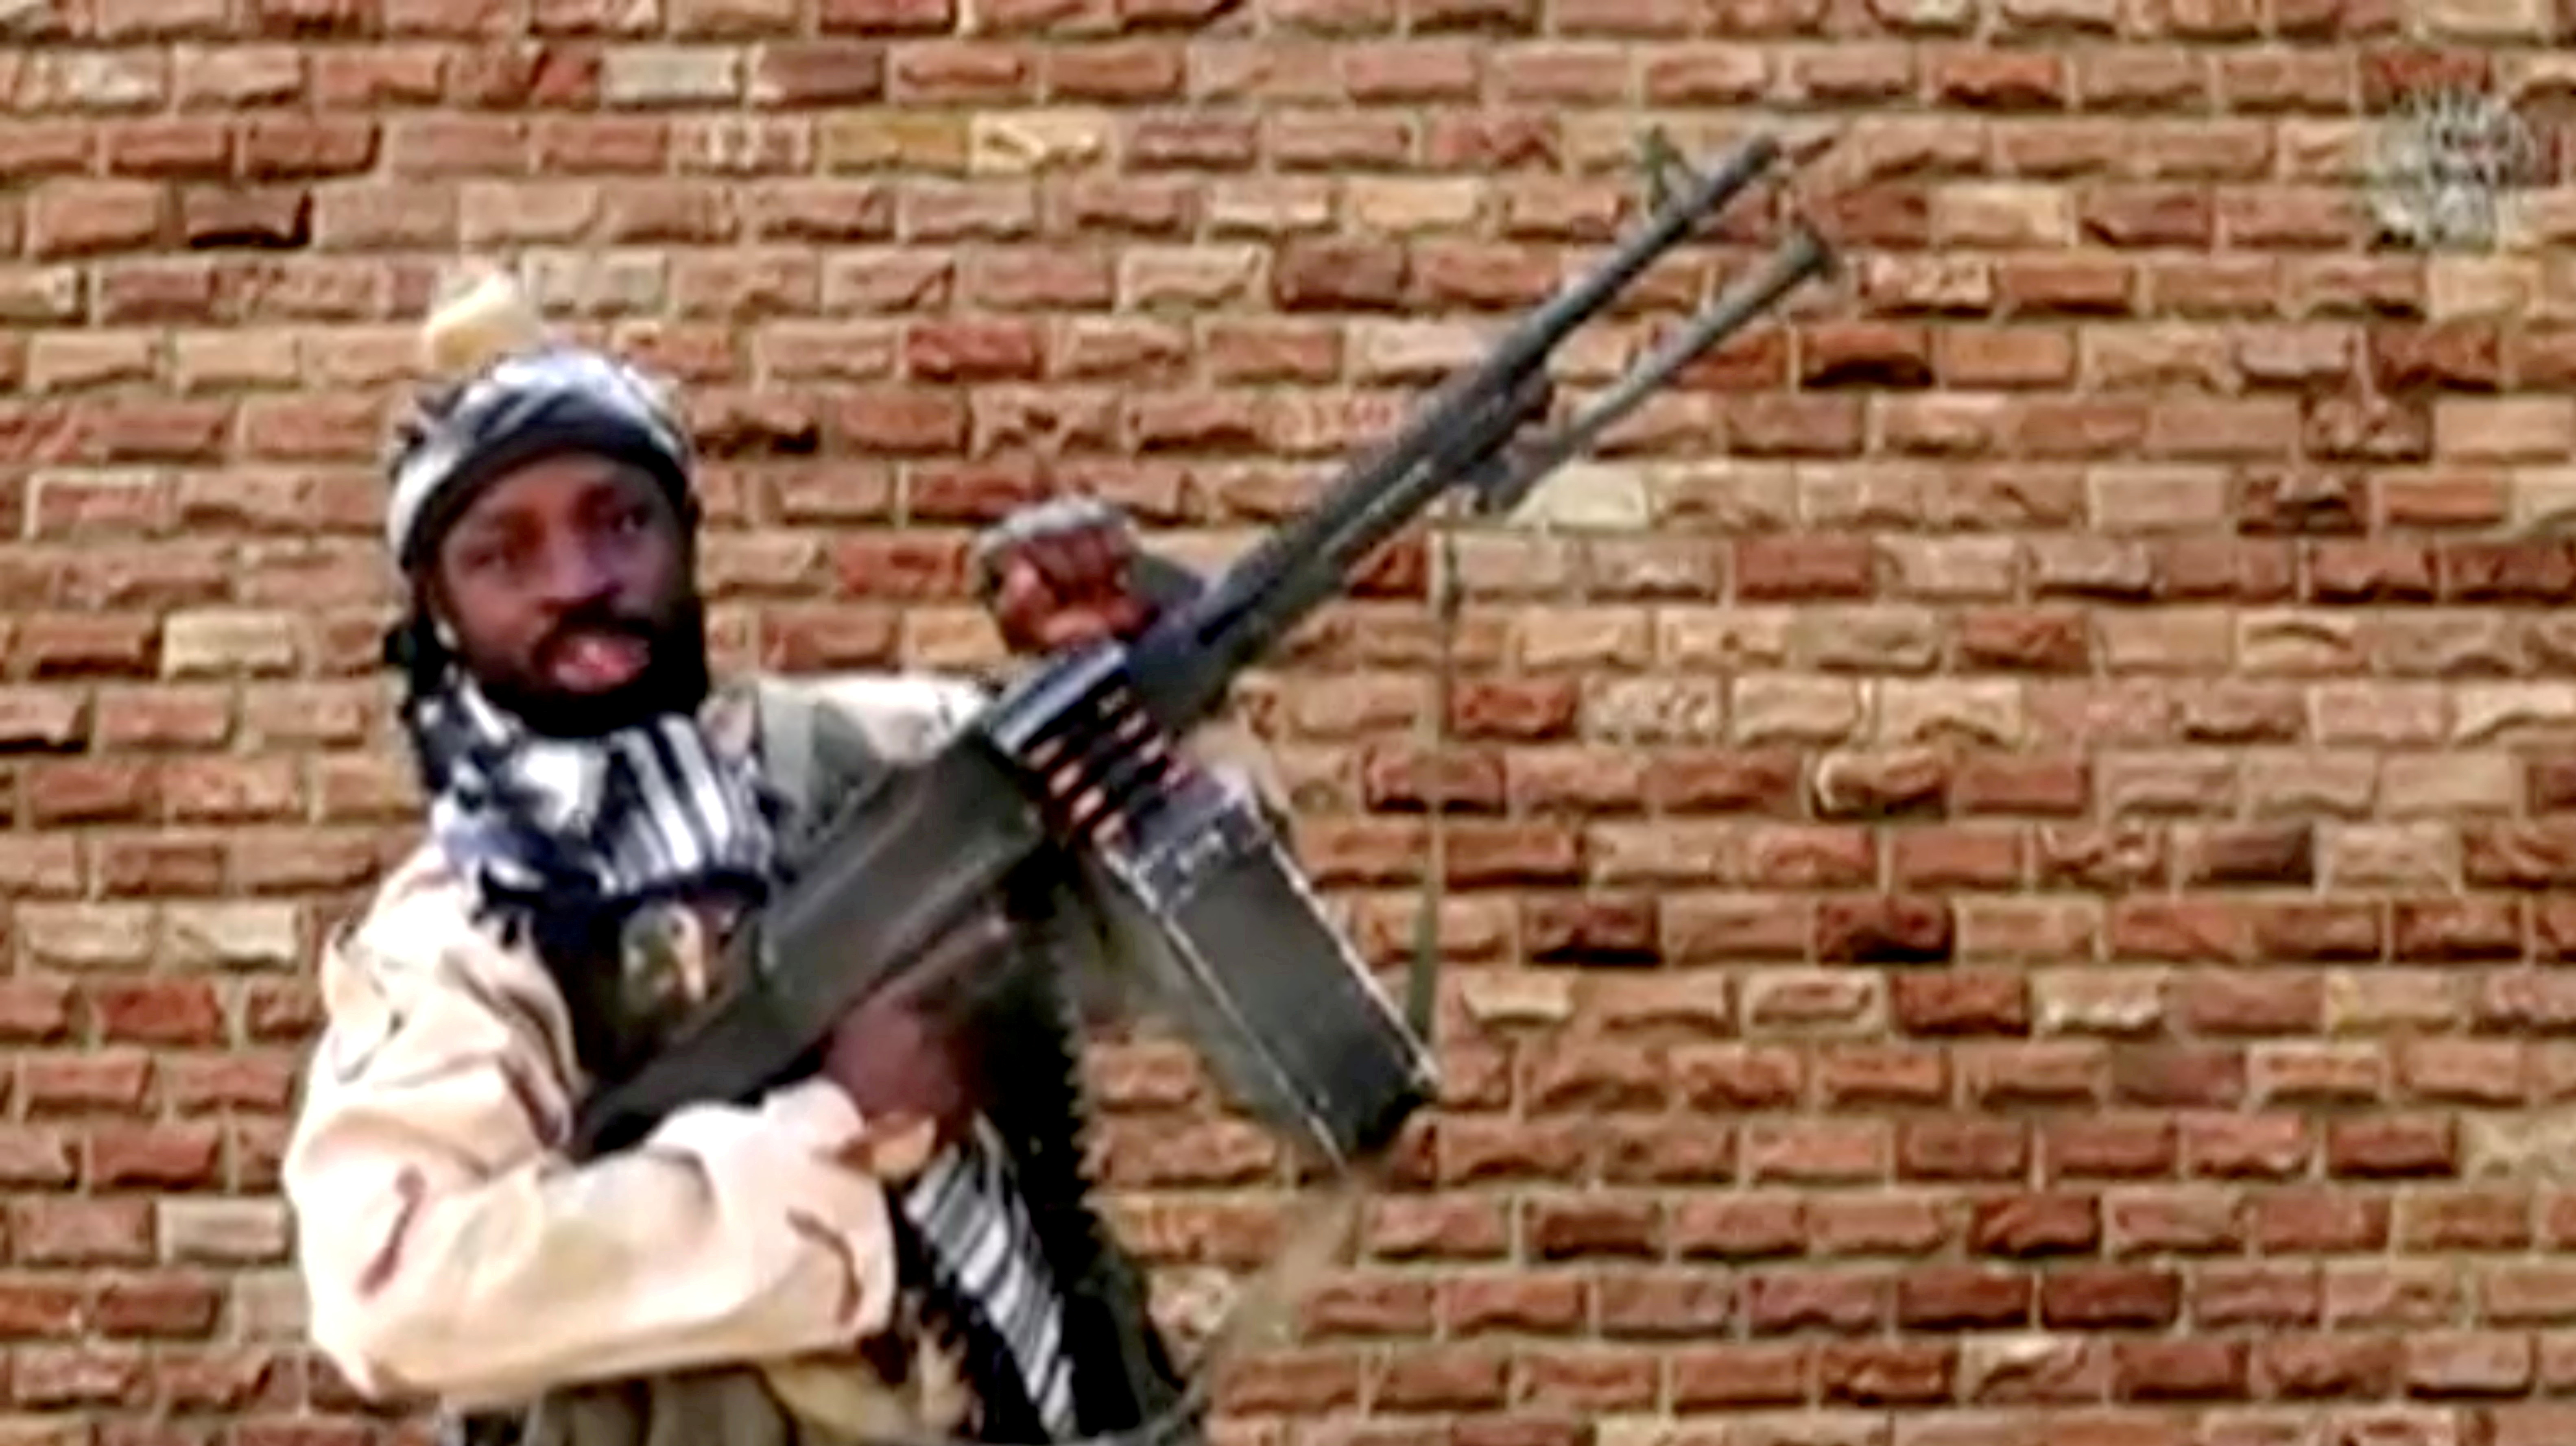 Boko Haram leader Abubakar Shekau holds a weapon in an unknown location in Nigeria